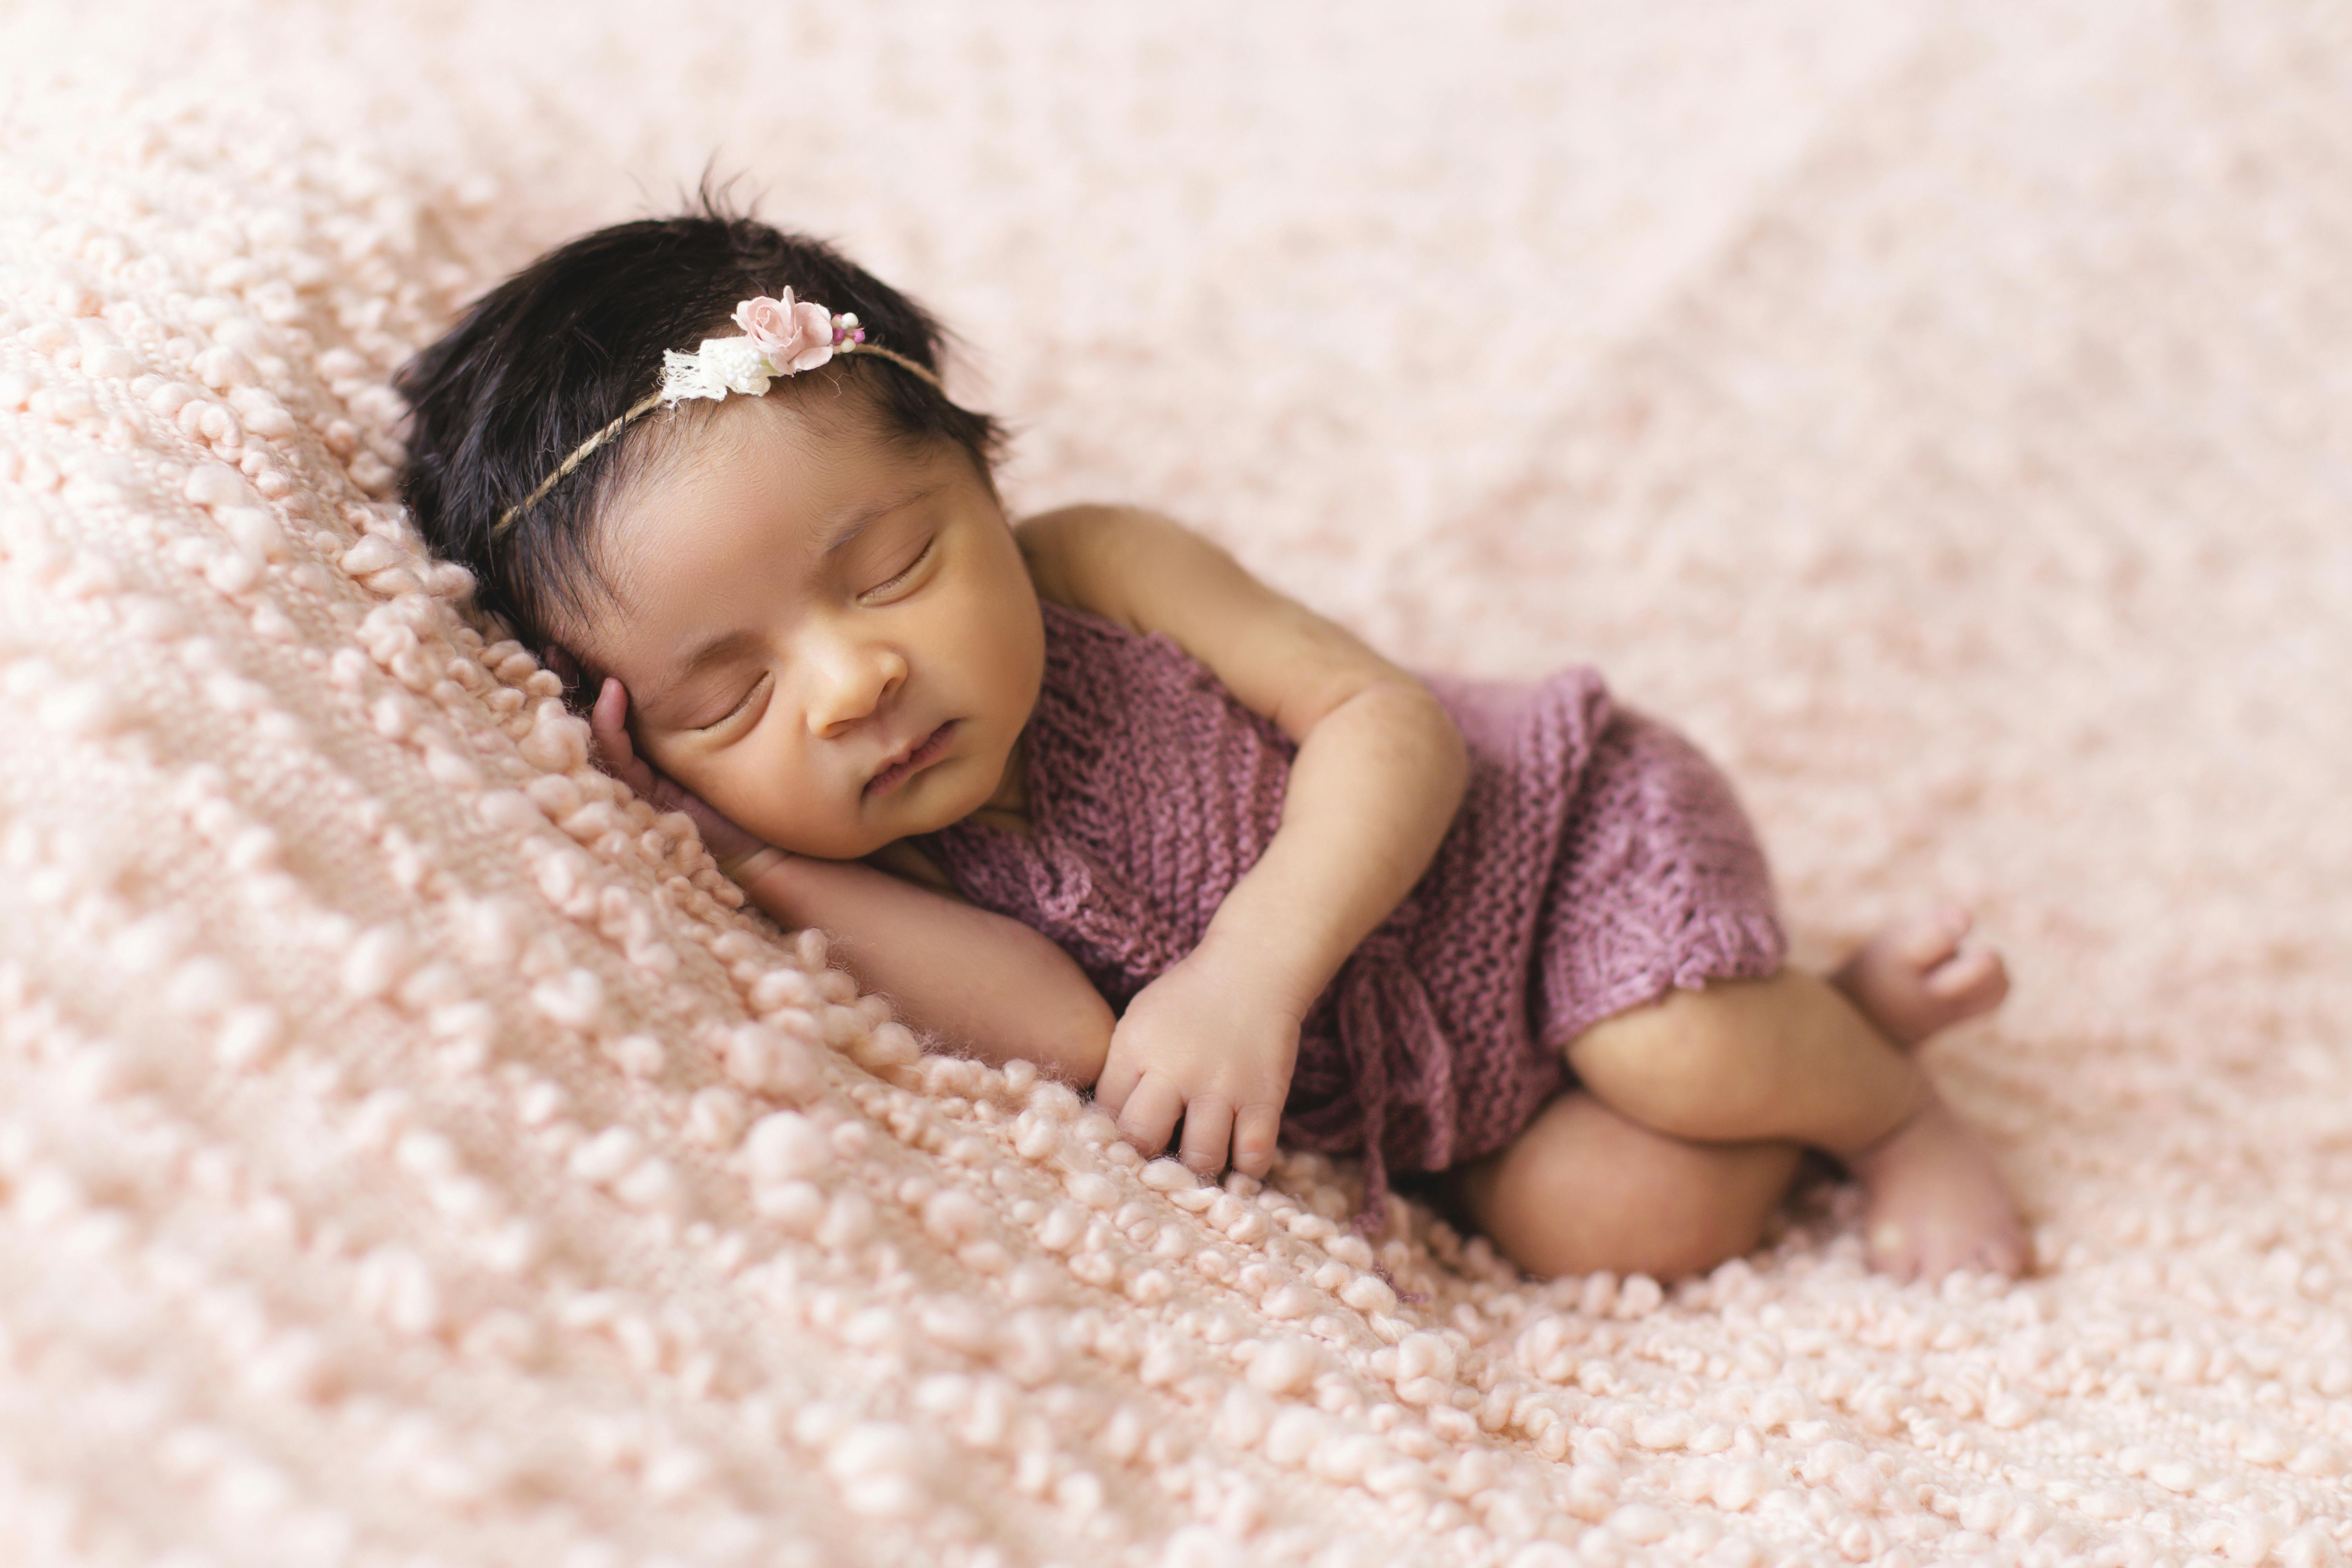 A sleeping baby girl | Source: Pexels